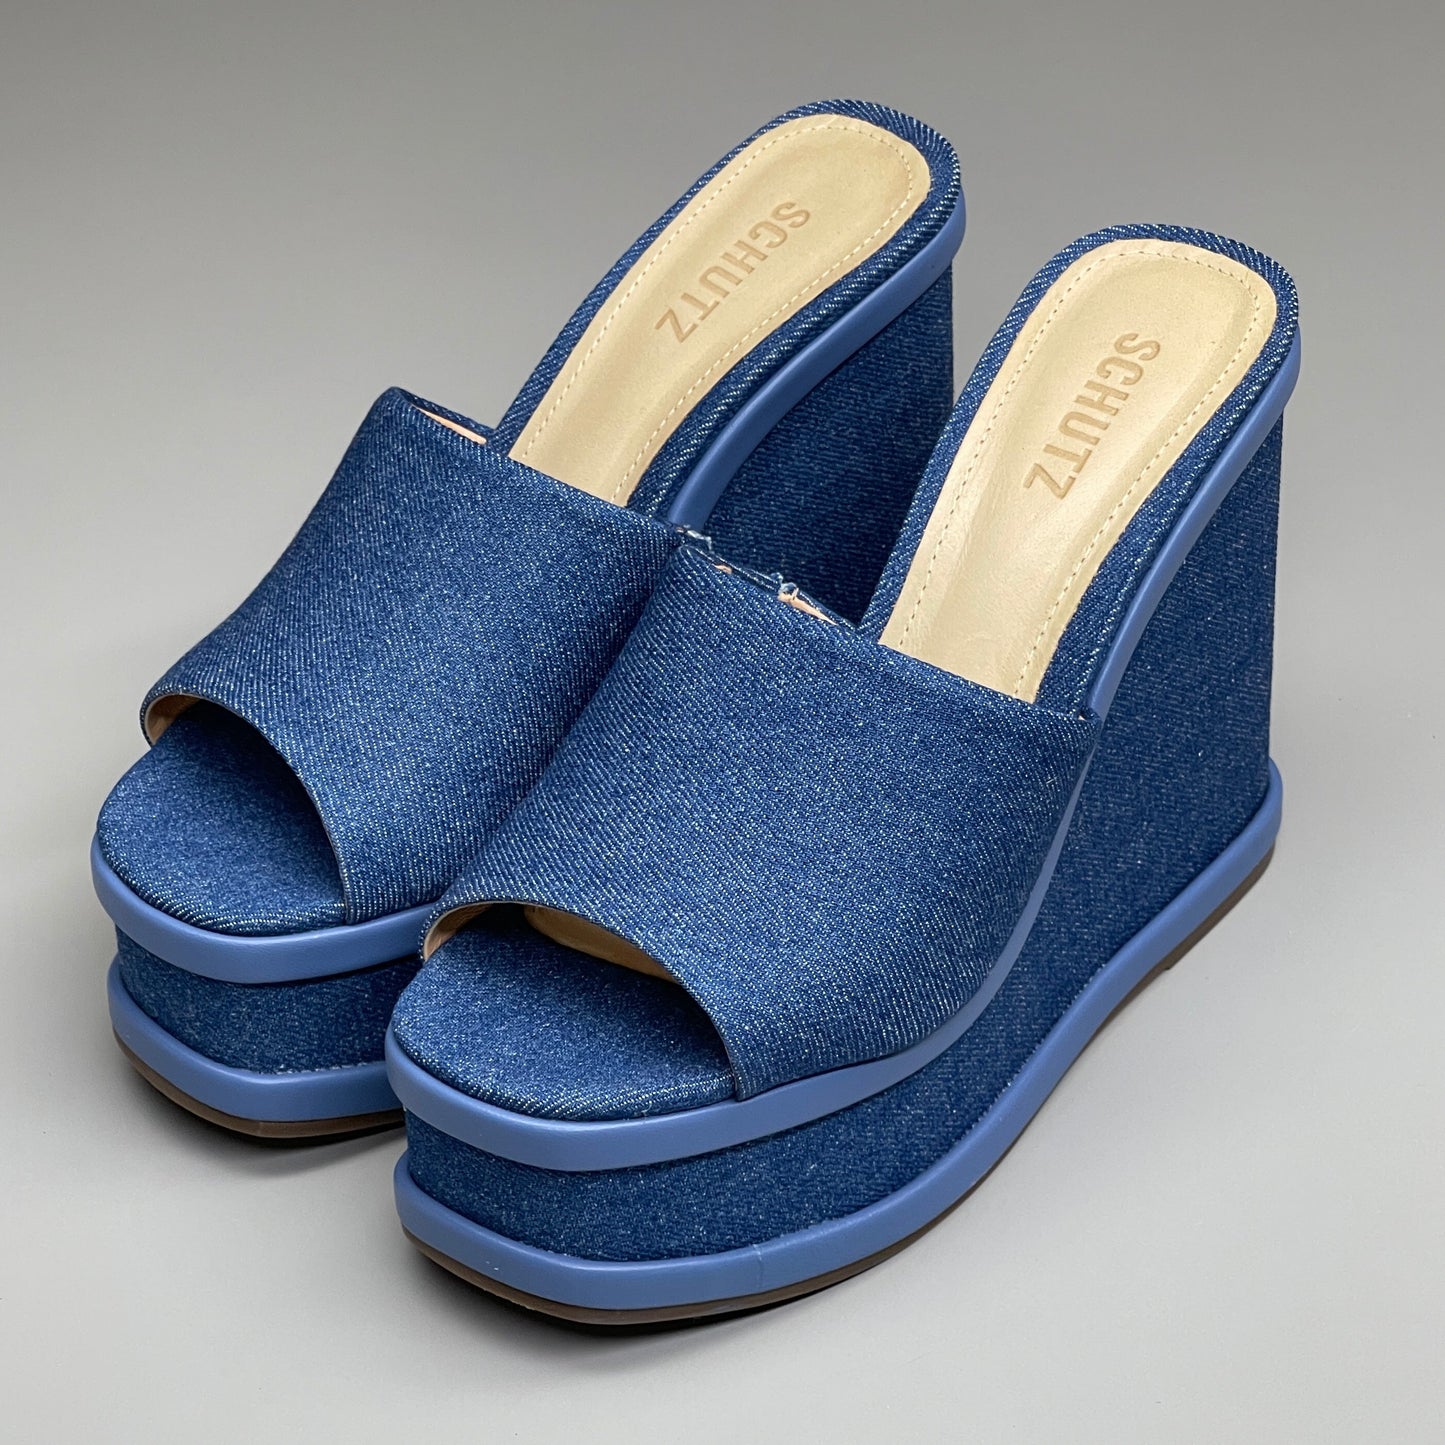 SCHUTZ Dalle Denim Women's Wedge Sandal Blue Platform Shoe Sz 8.5B (New)